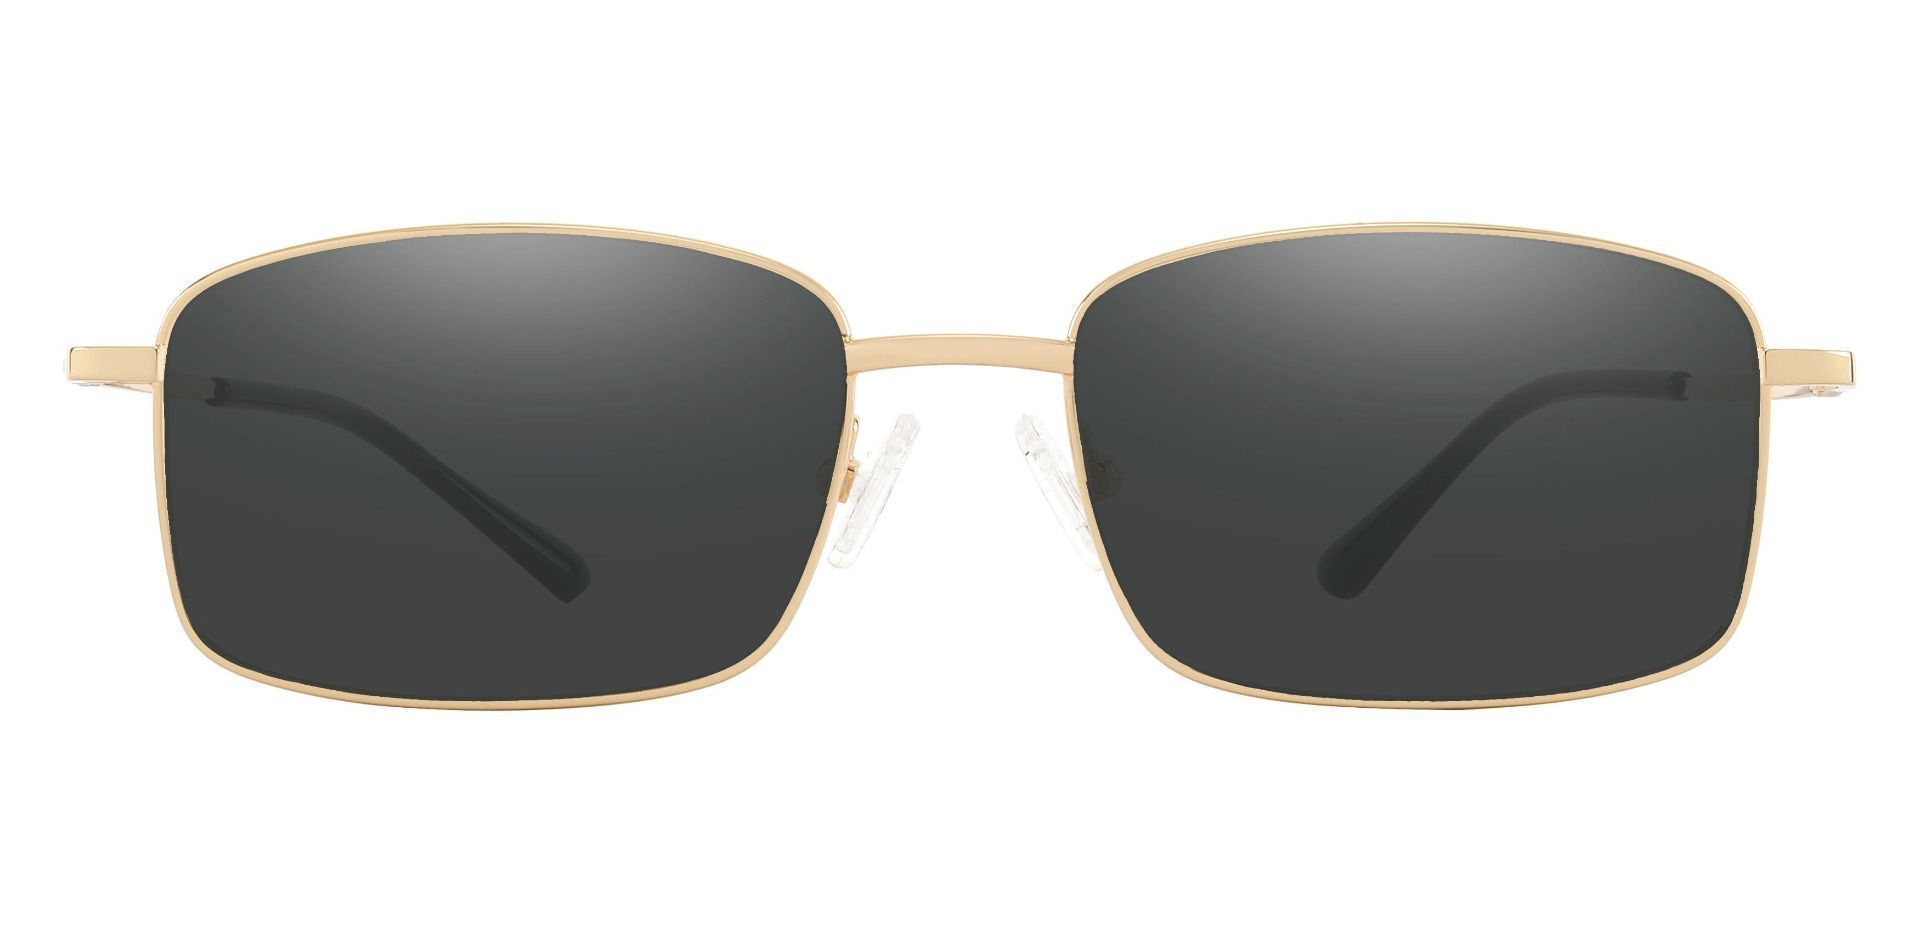 Clyde Rectangle Progressive Sunglasses - Gold Frame With Gray Lenses